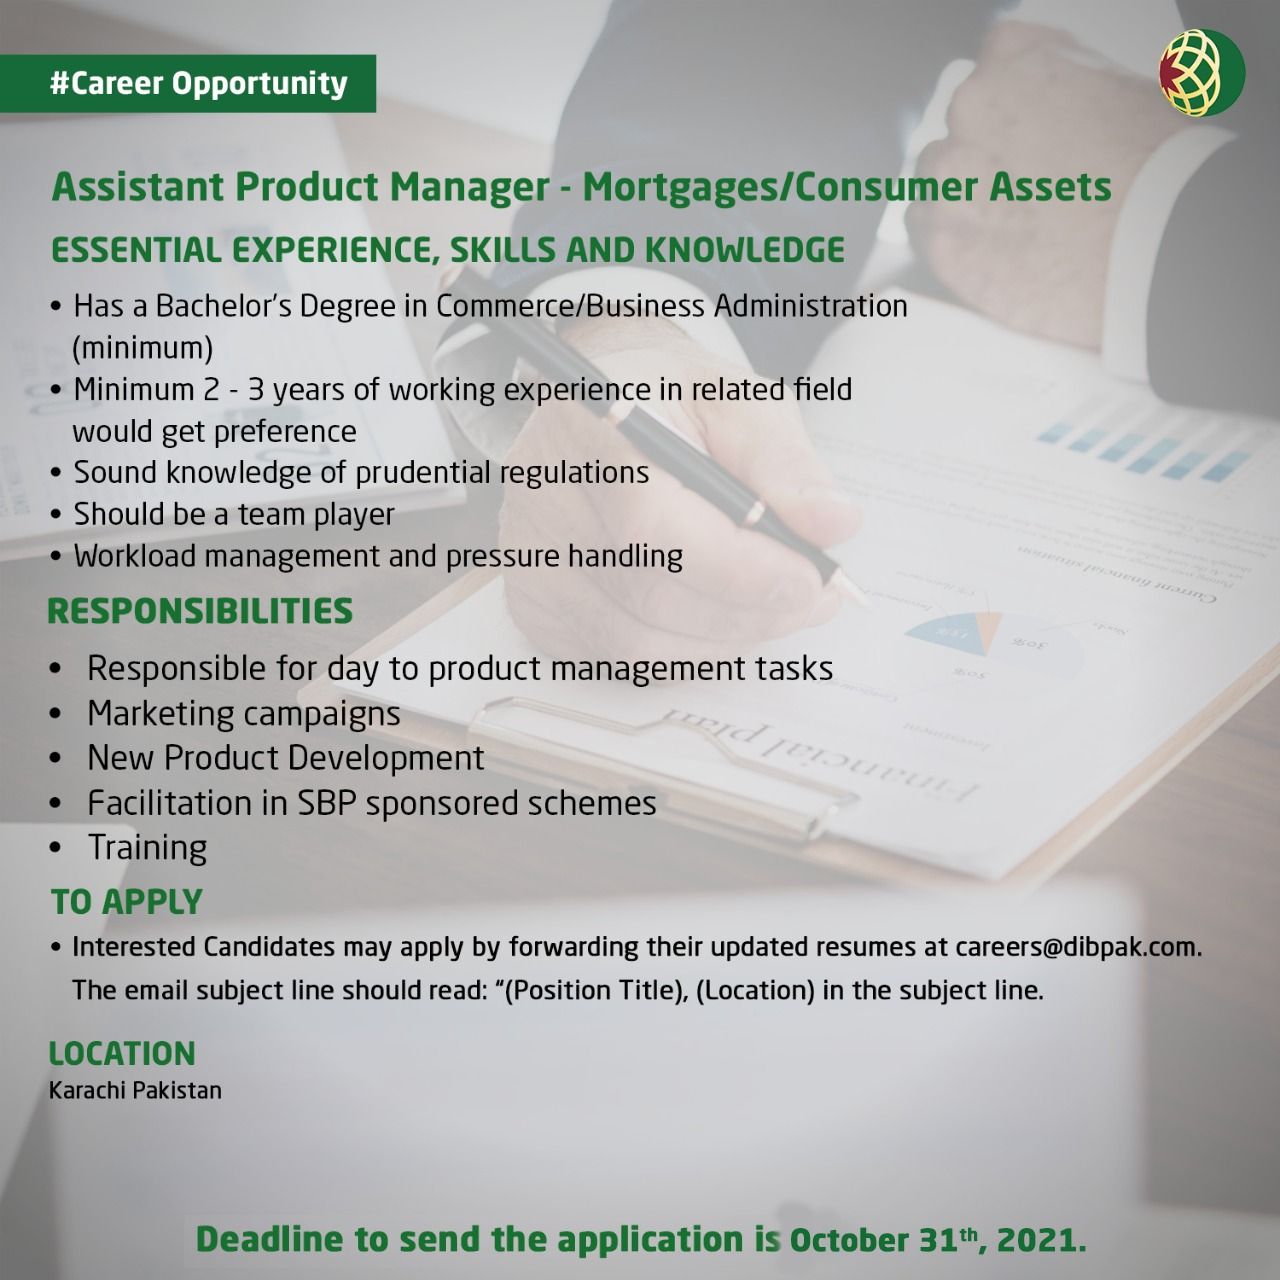 Dubai Islamic Bank Pakistan DIBP Jobs Assistant Product Manager-Apply At: careers@dibpak.com